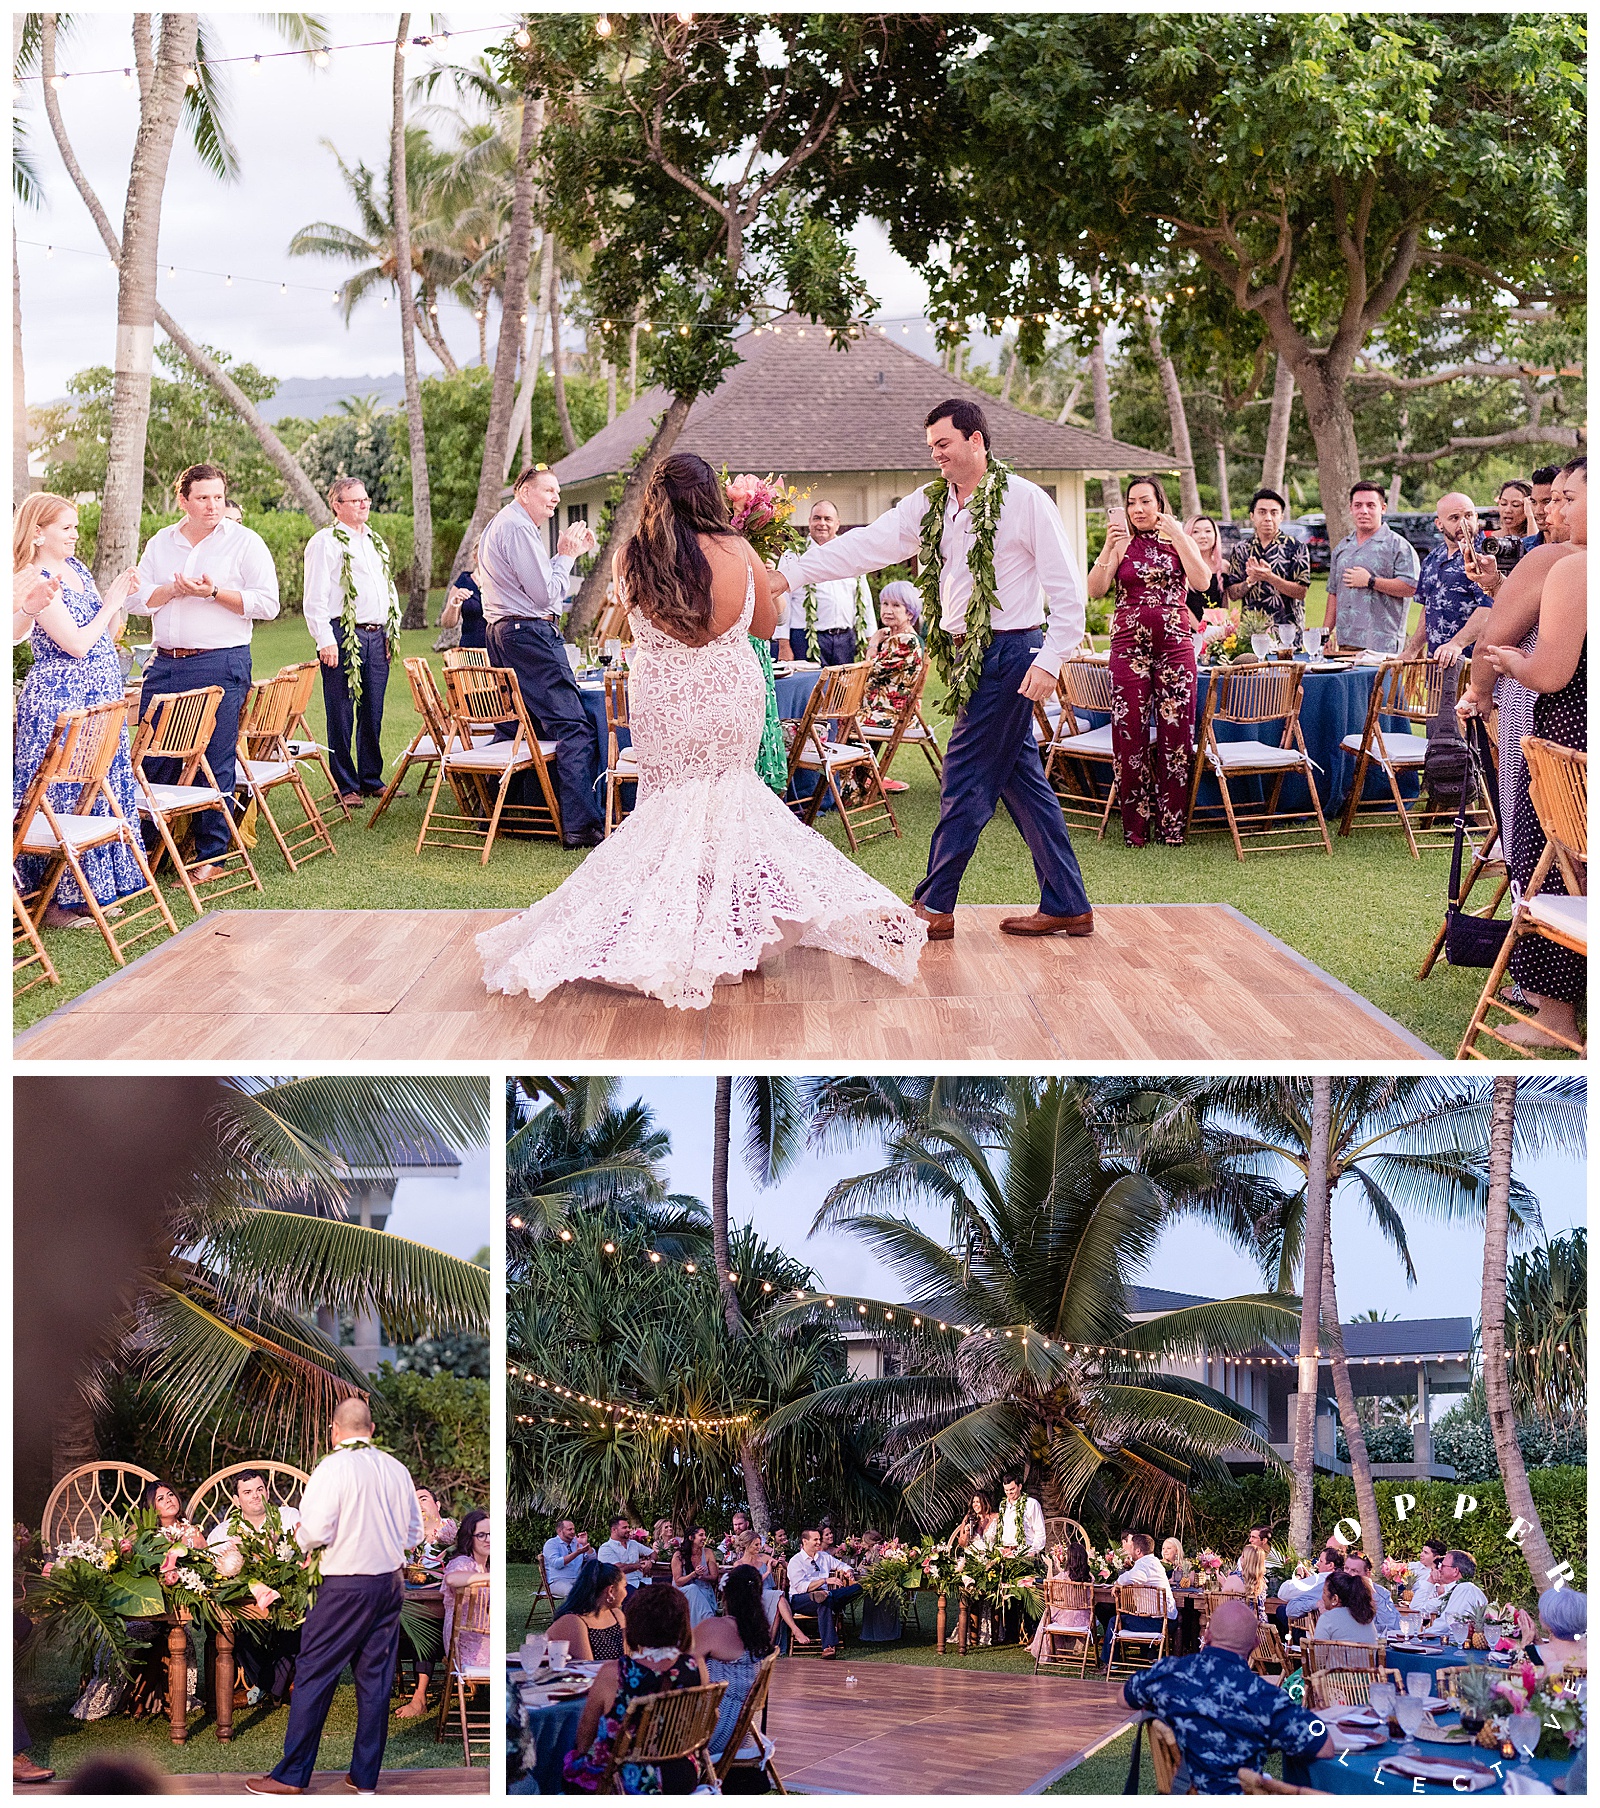 Oahu wedding reception grand entrance